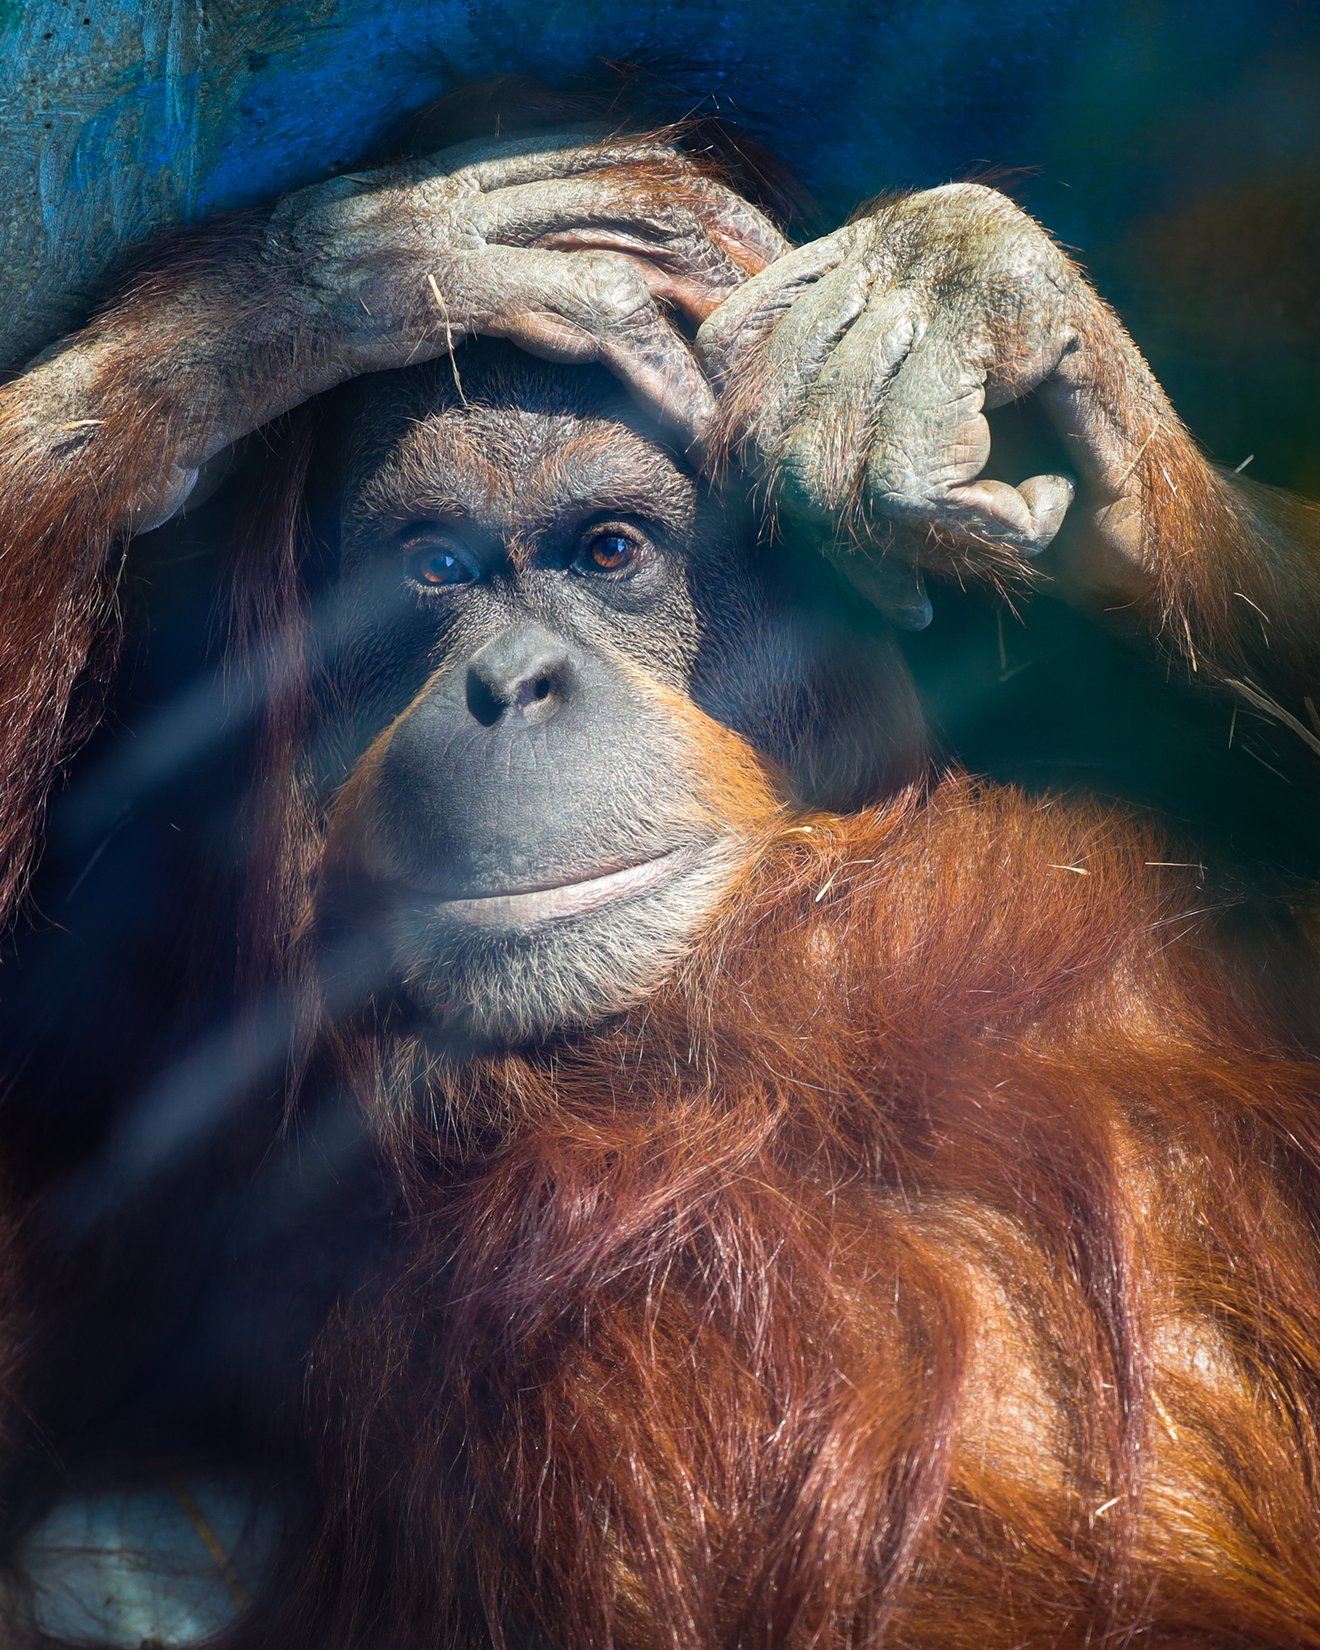 Orangutan, Melbourne Zoo -Seed Nft